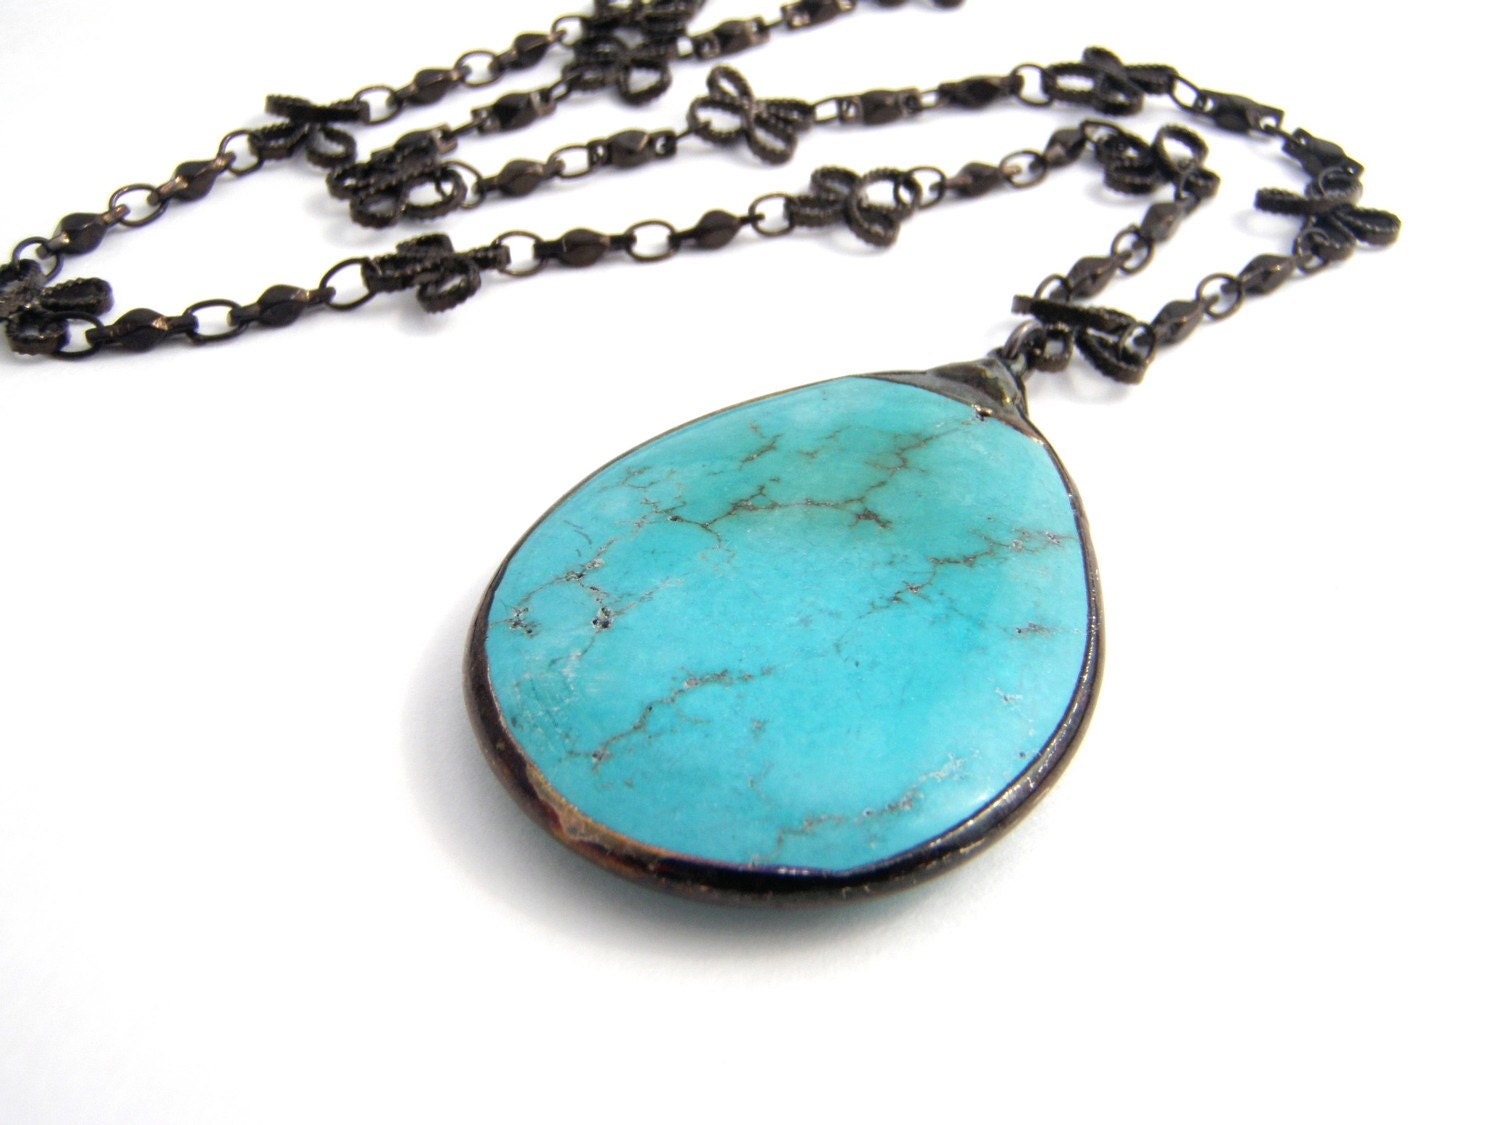 Necklace-Turquoise - Large Teardrop Pendant - Black Nickle Chain - Southwestern